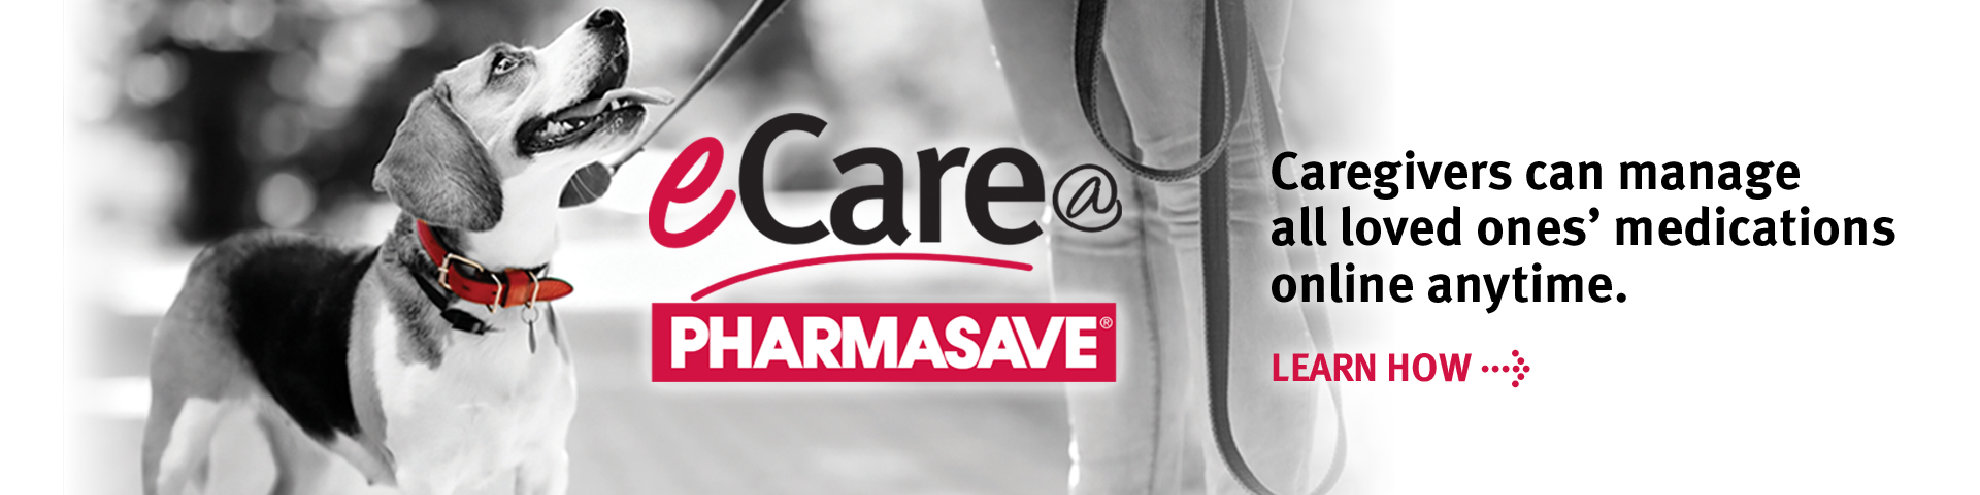 Online prescriptions pharmasave ecare